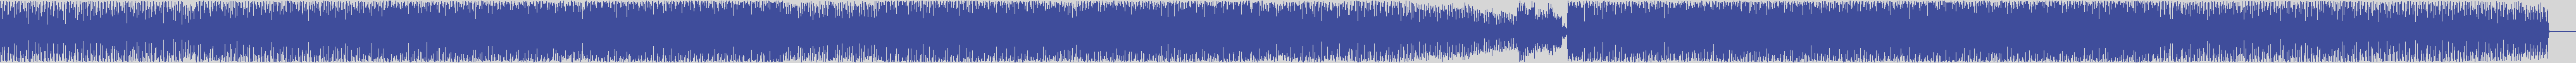 atomic_recordings [AR016] Simo Nex - Esoteric  [DrumTech Mix] audio wave form